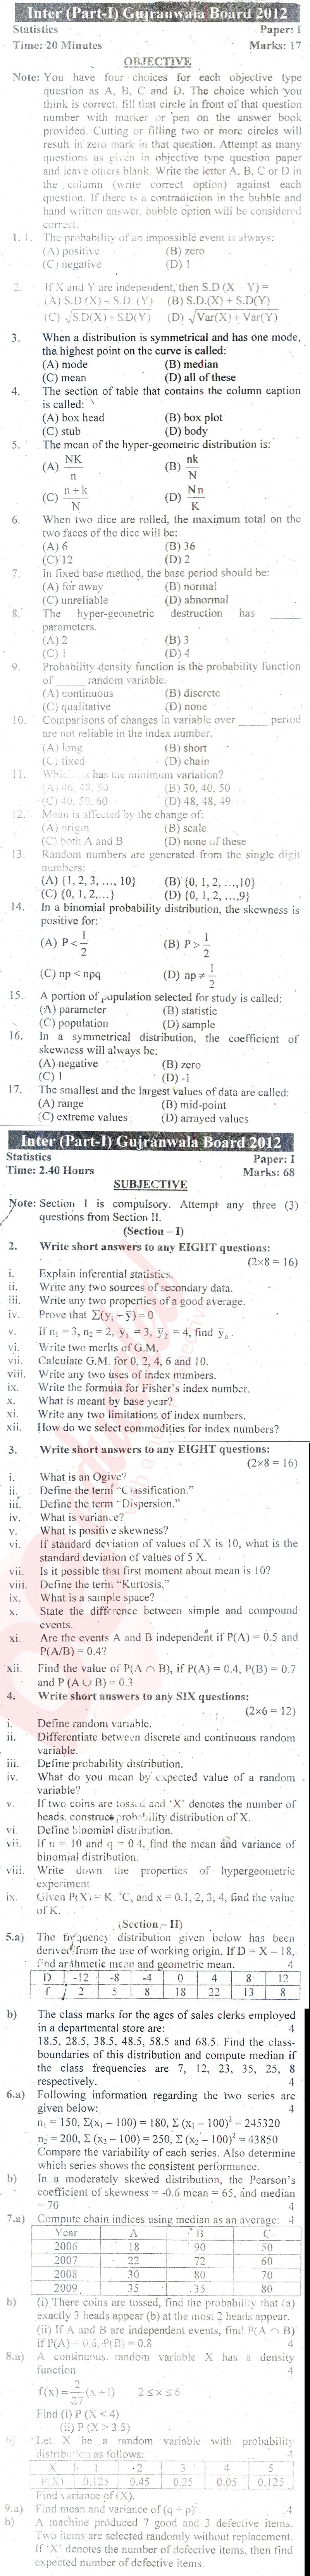 Statistics ICS Part 1 Past Paper Group 1 BISE Gujranwala 2012